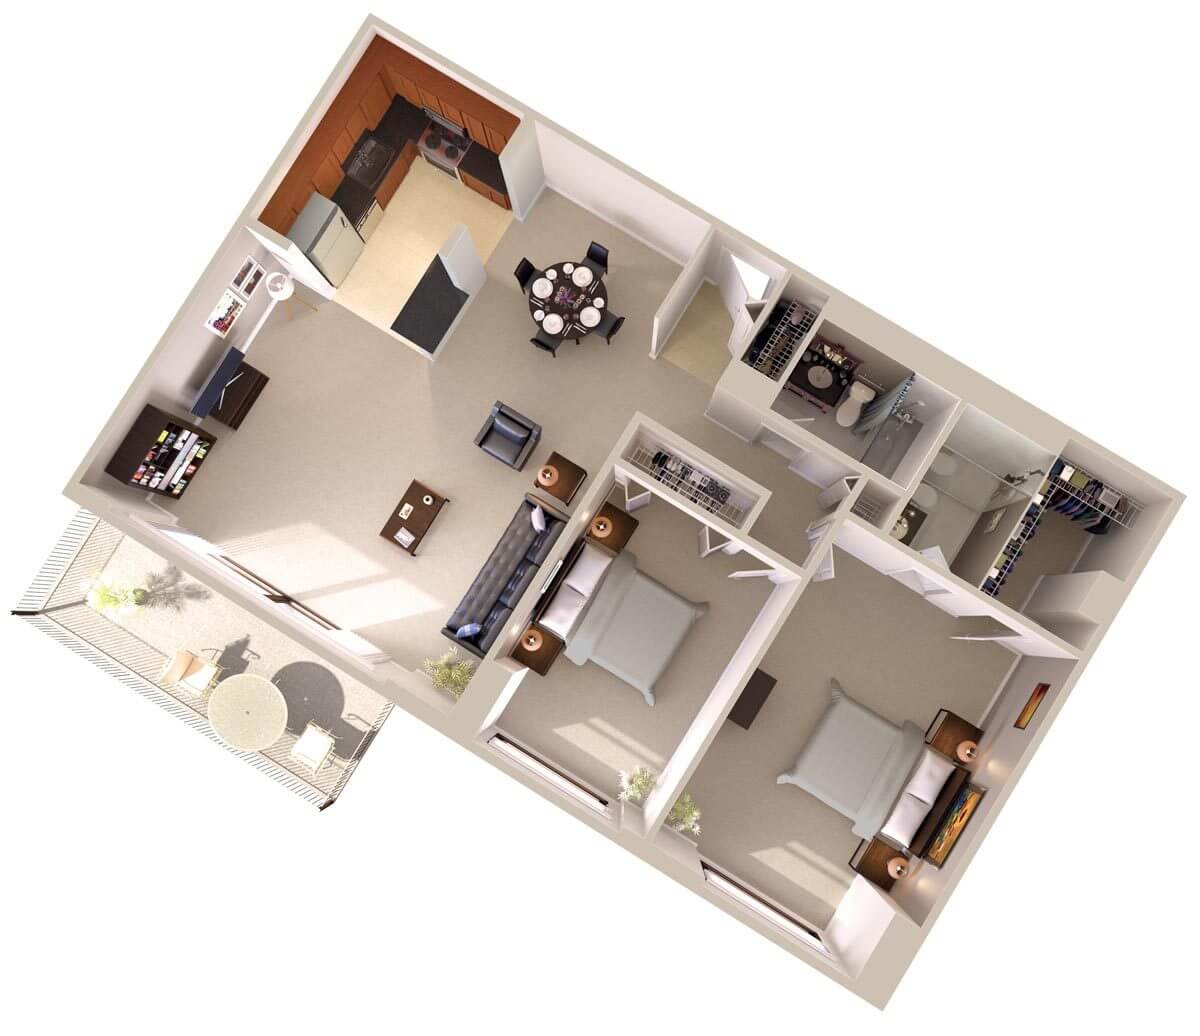 Two Bedroom Apartment Floor Plans